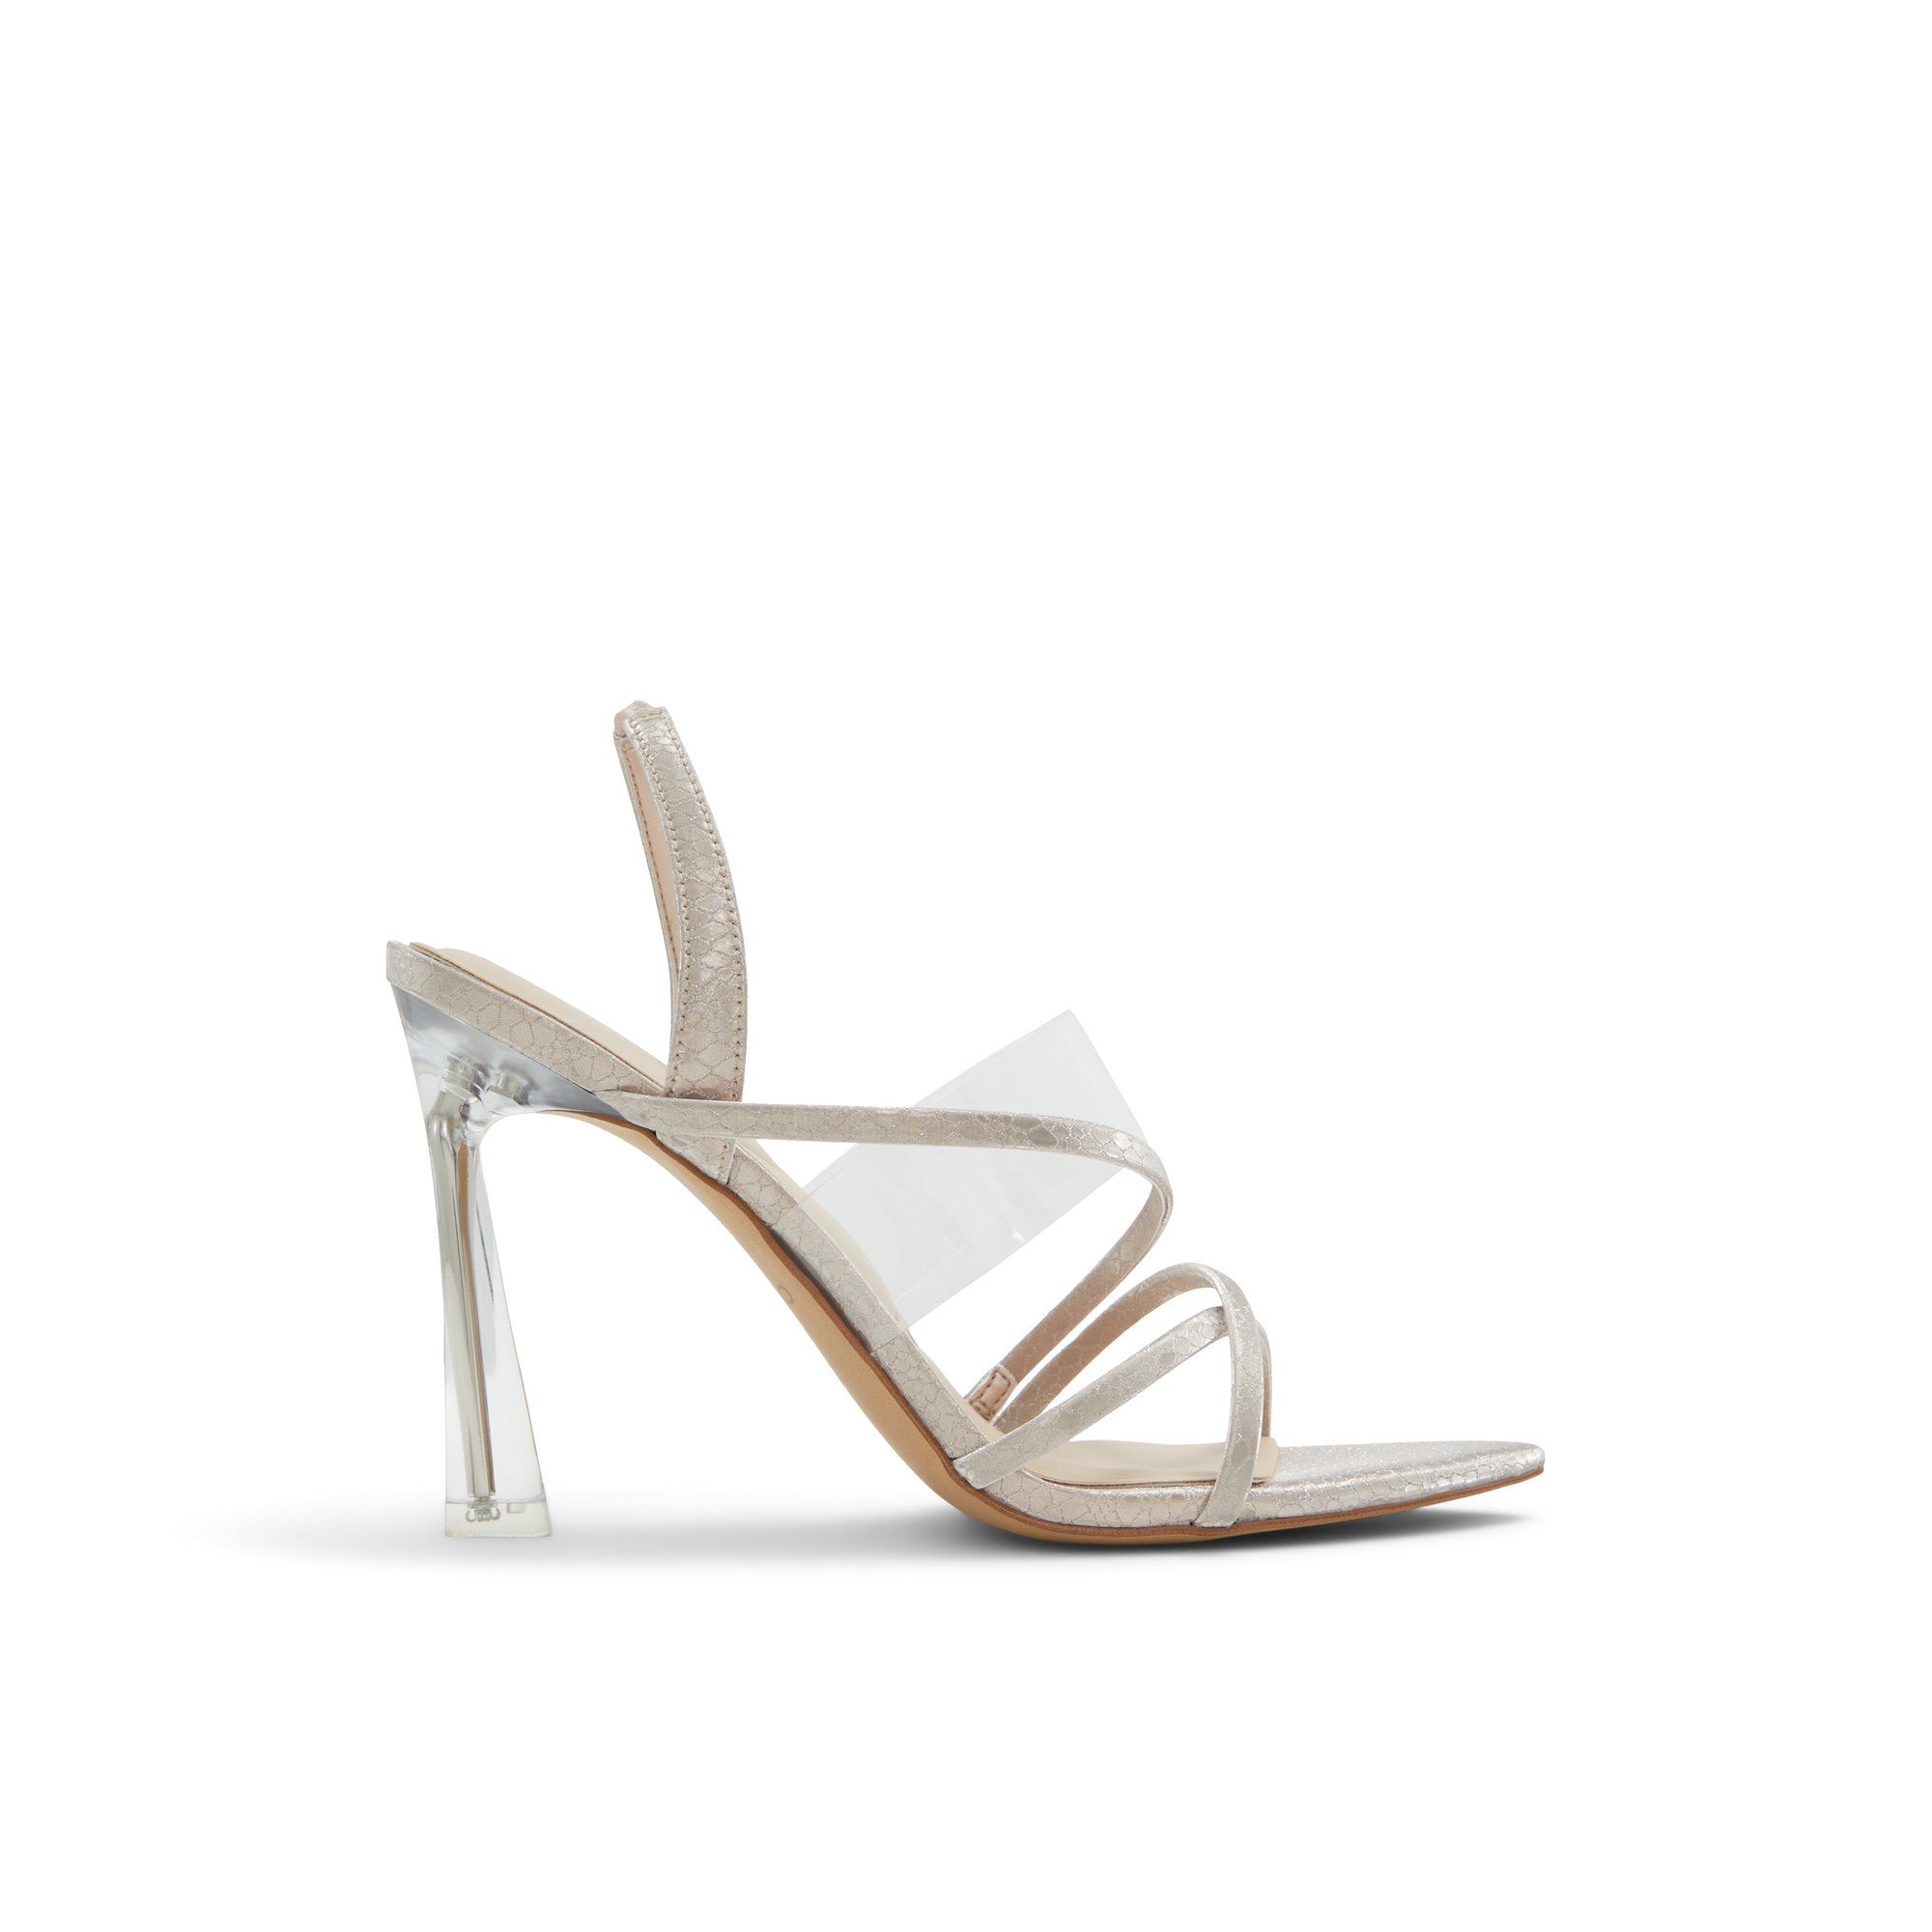 ALDO Merengue - Women's Strappy Sandal Sandals - Pink